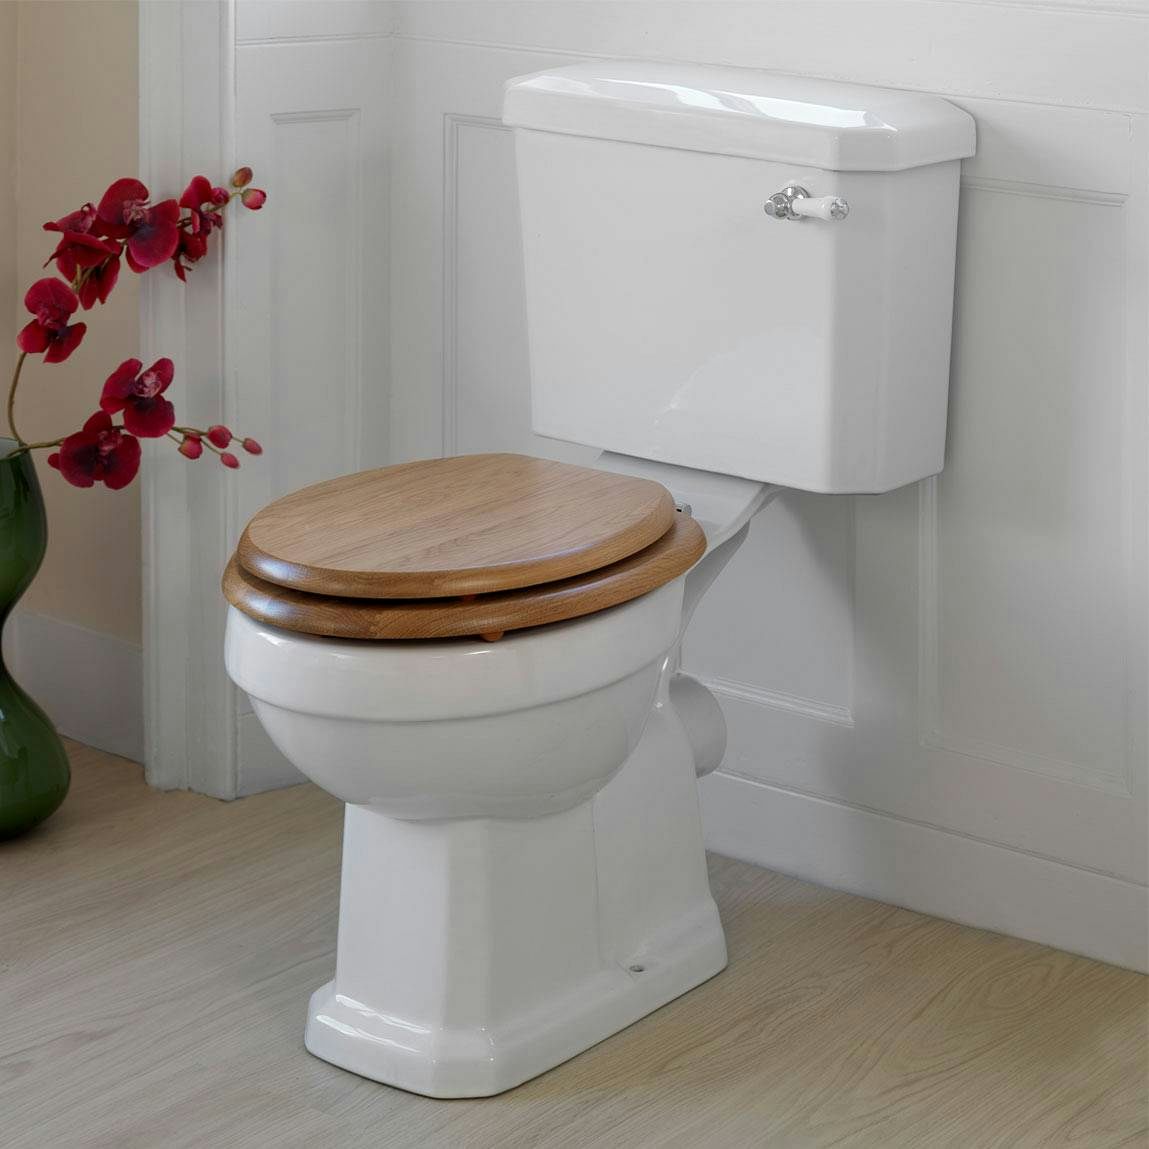 Oak wooden toilet seat